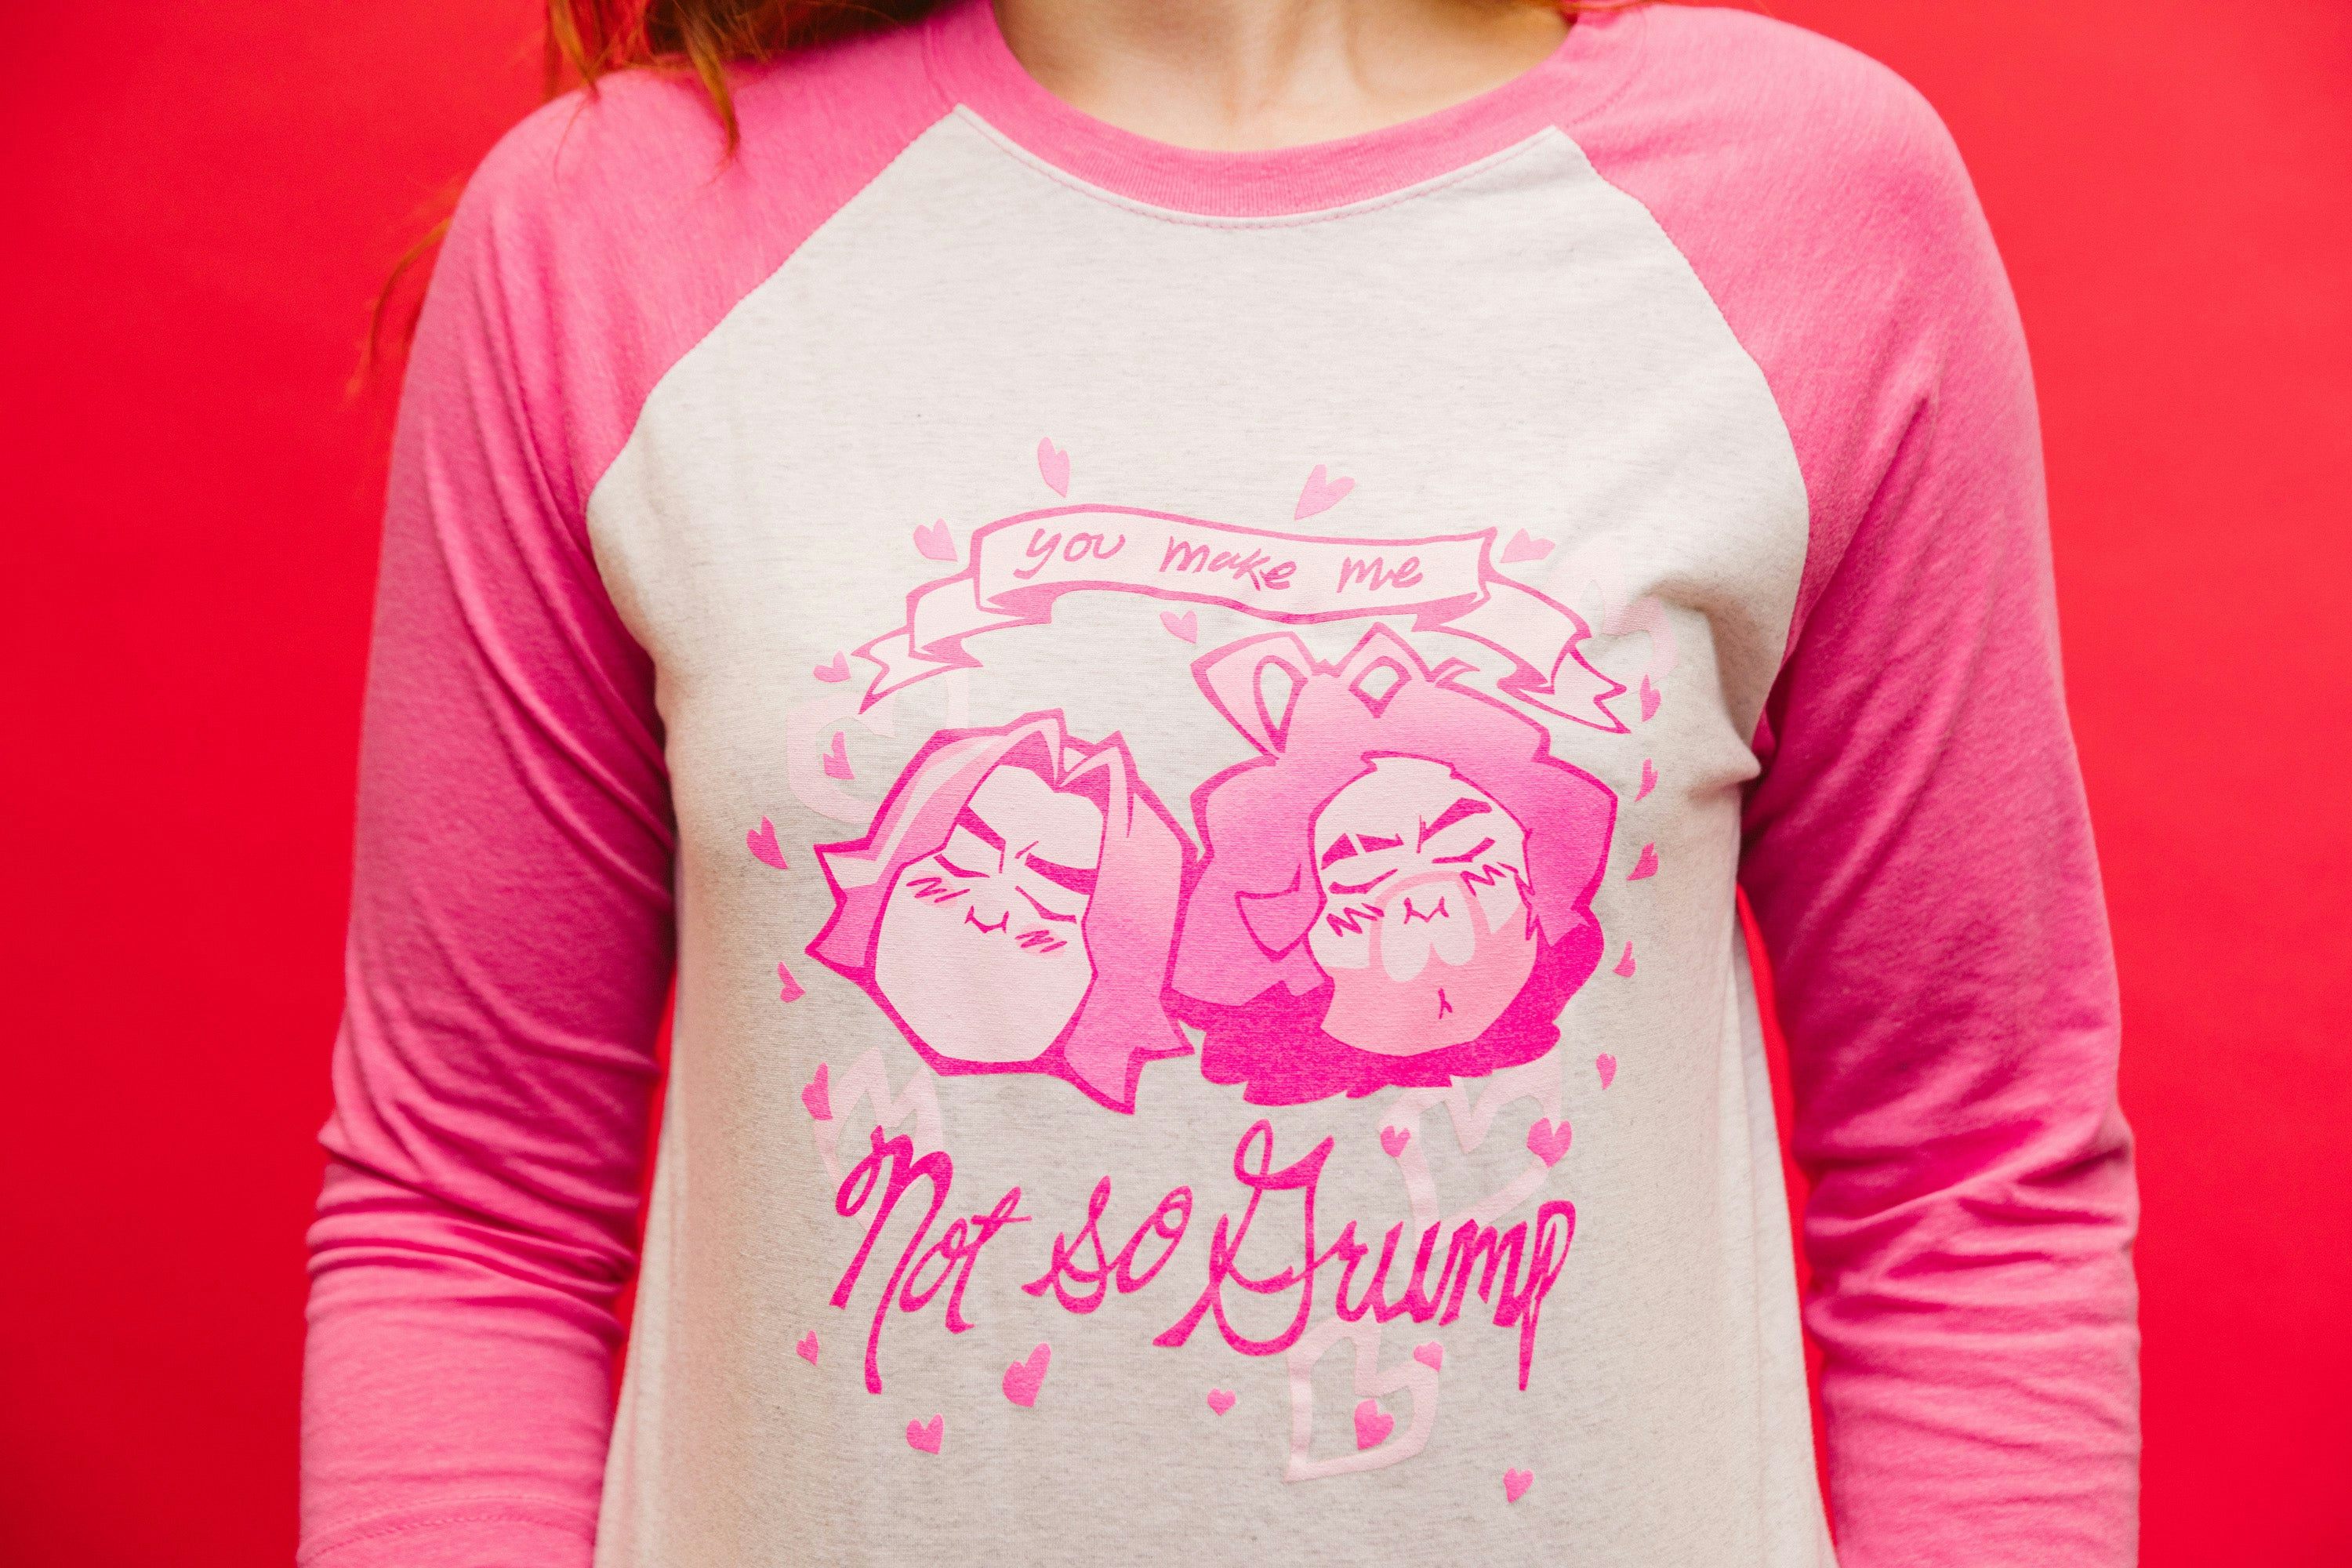 Game Grumps - “You Make Me Not So Grump” Valentine’s Day Unisex Raglan Shirt